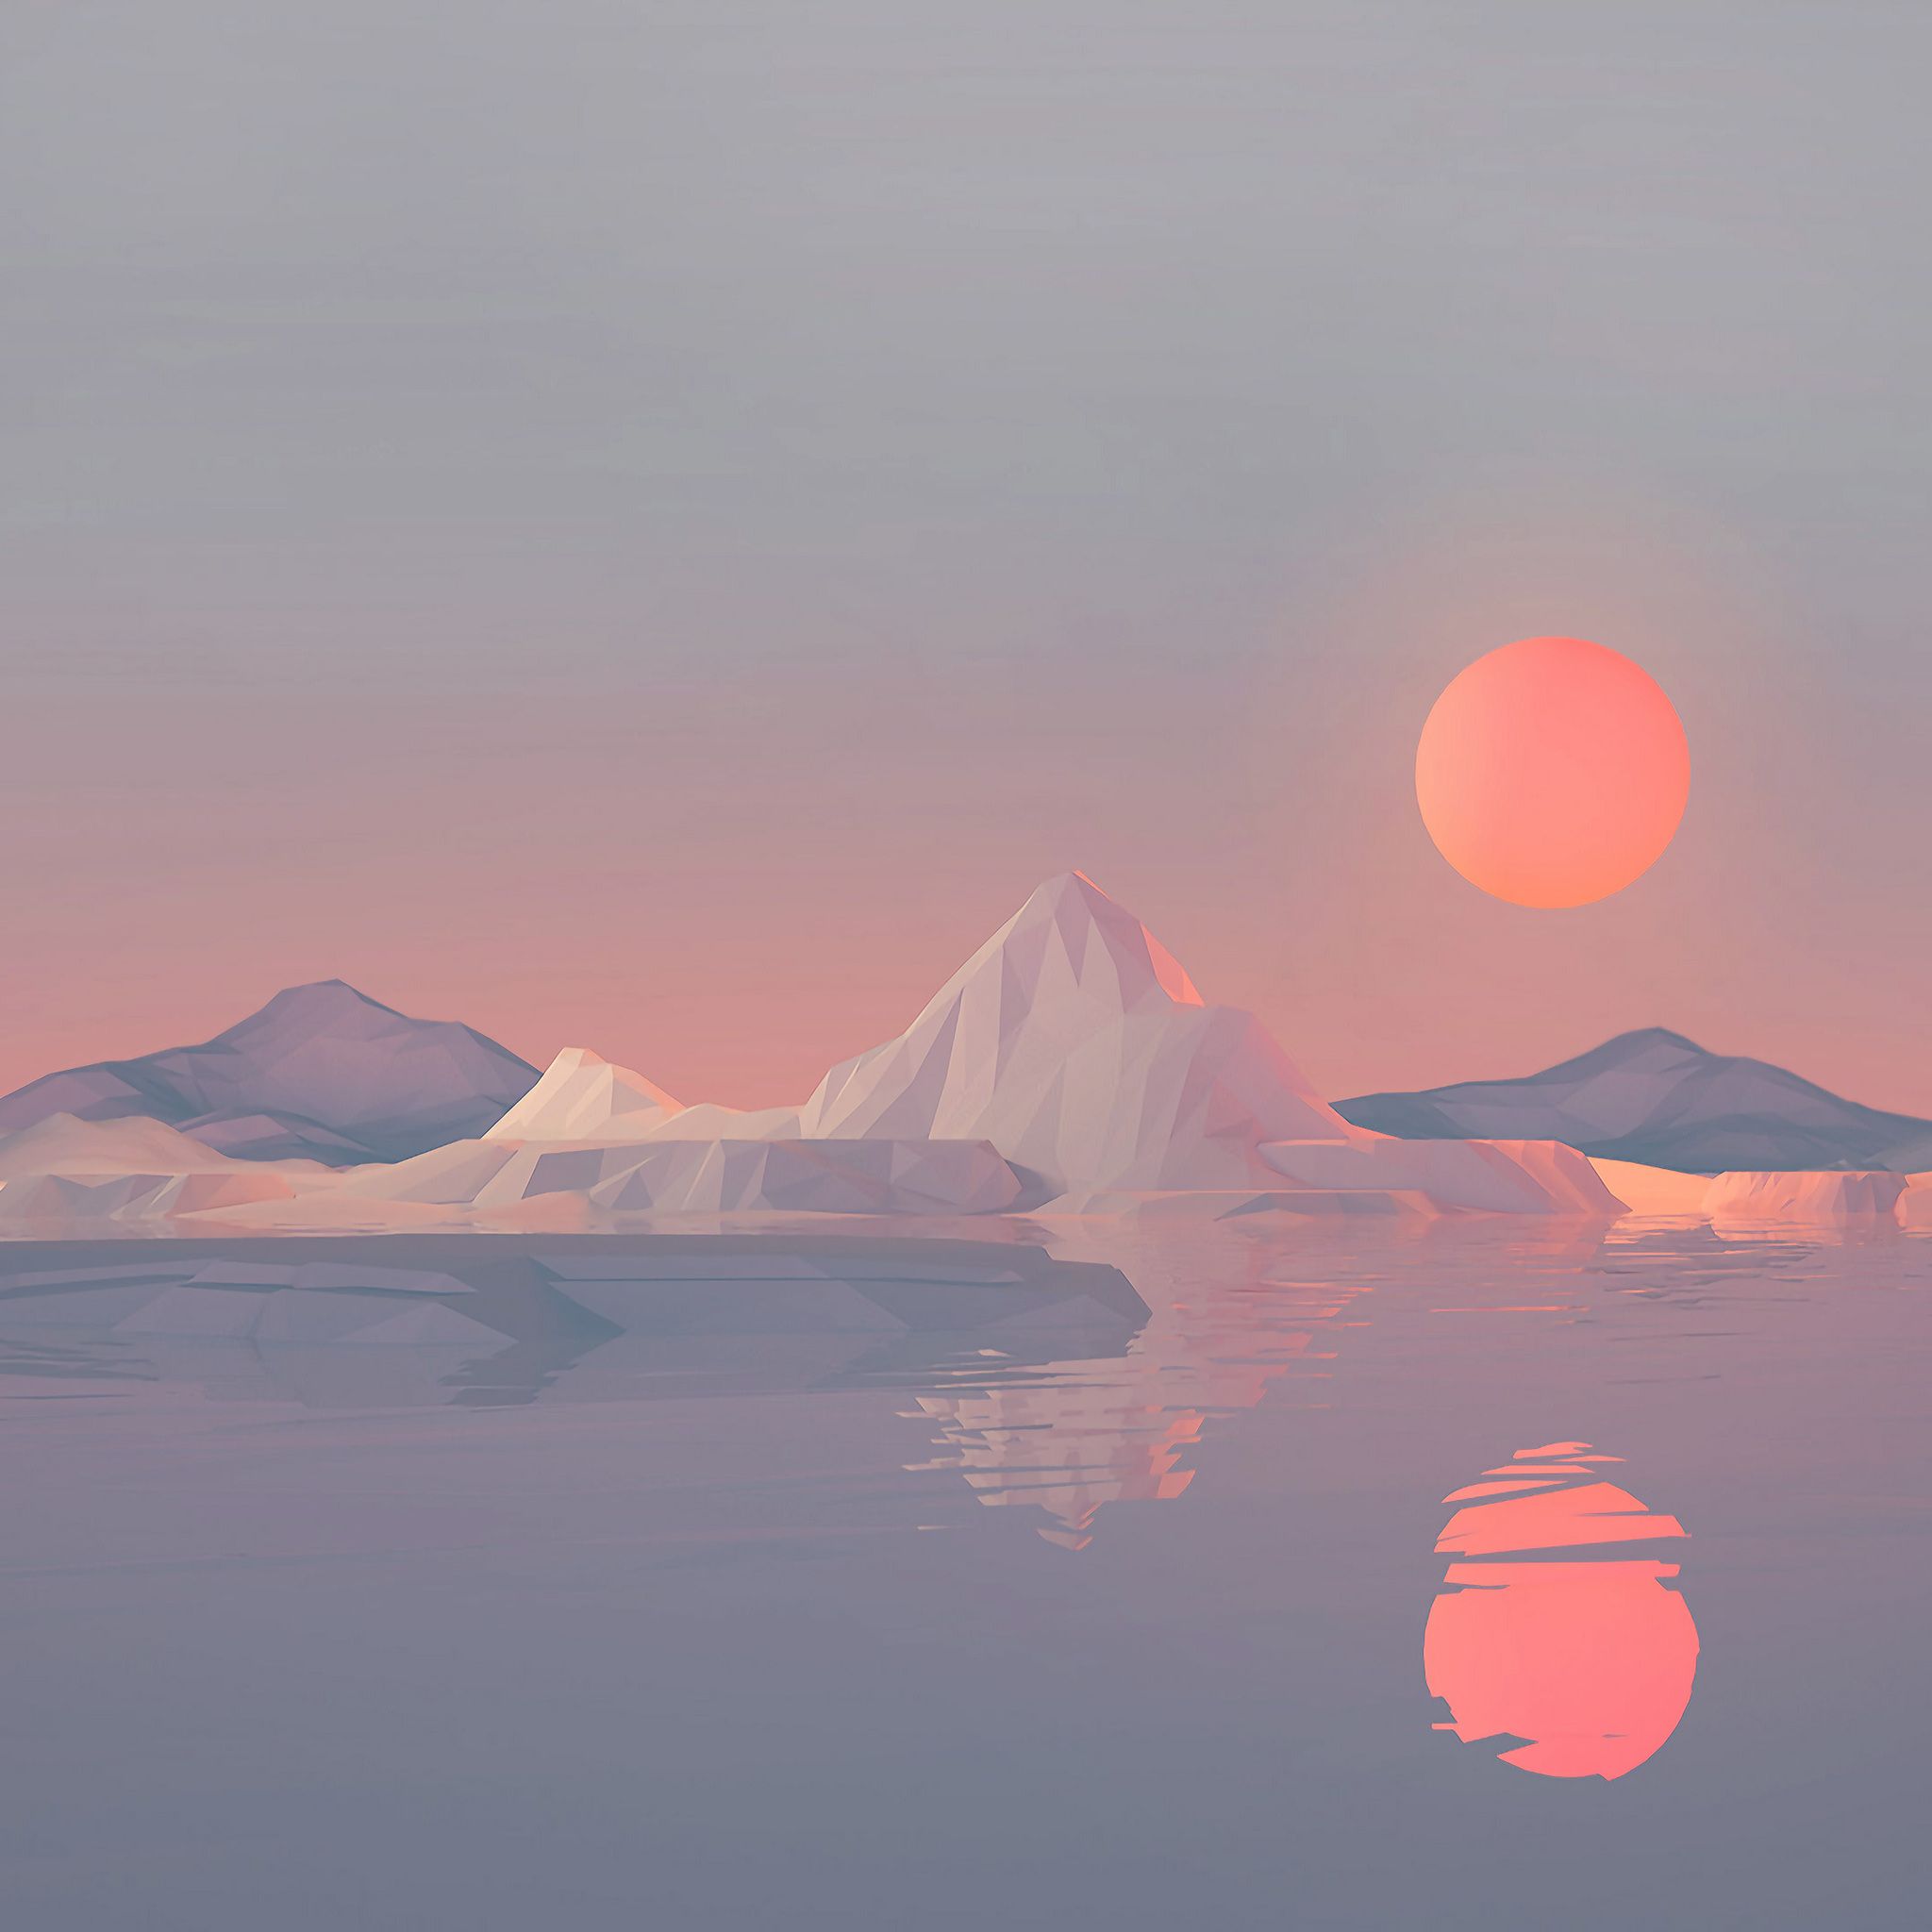 Iceberg Minimalist 4k iPad Air HD 4k Wallpaper, Image, Background, Photo and Picture